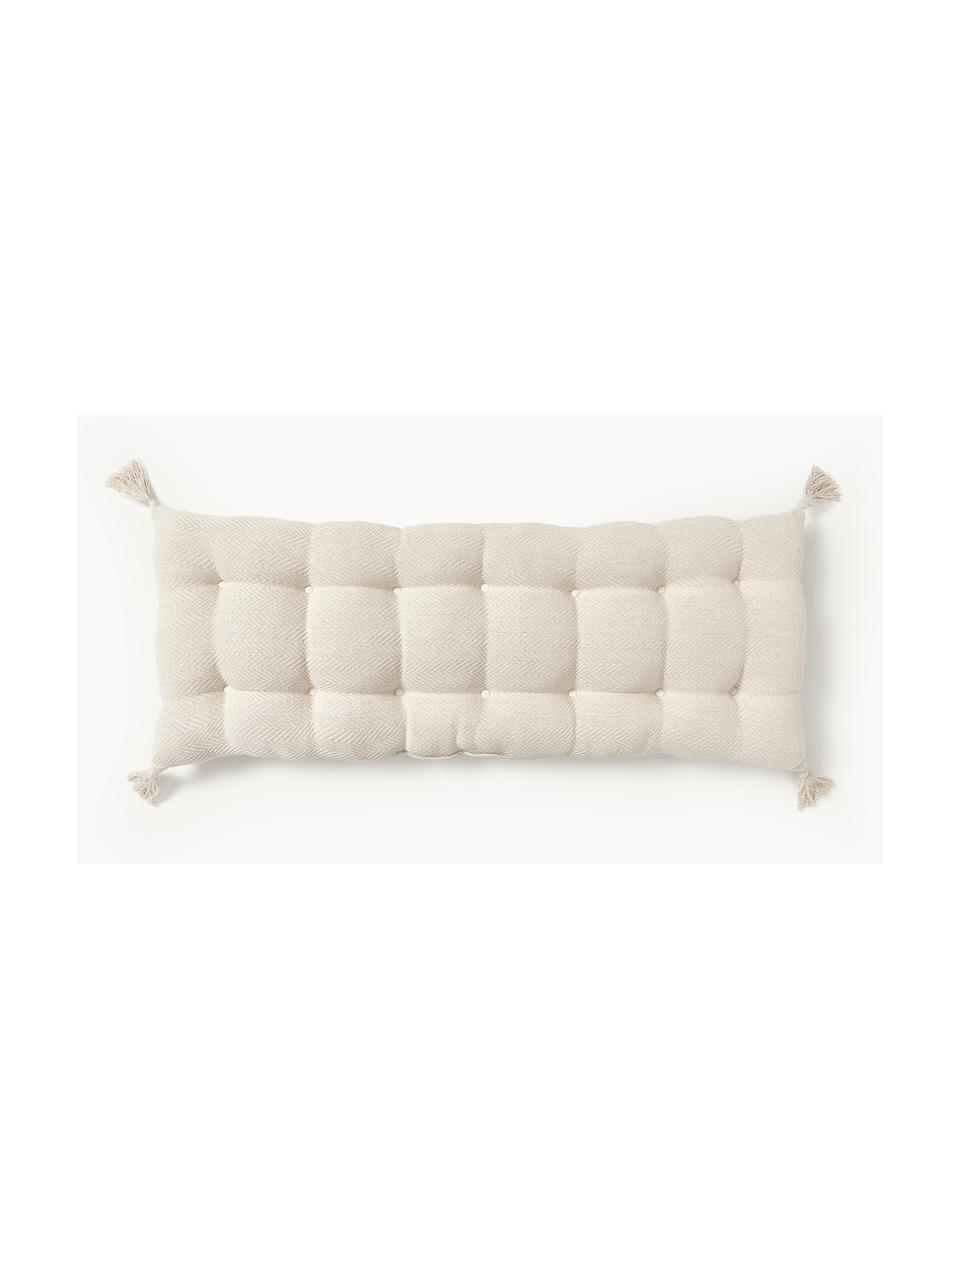 Cuscino per panca con nappe Rheya, Bianco latte, Larg. 48 x Lung. 120 cm